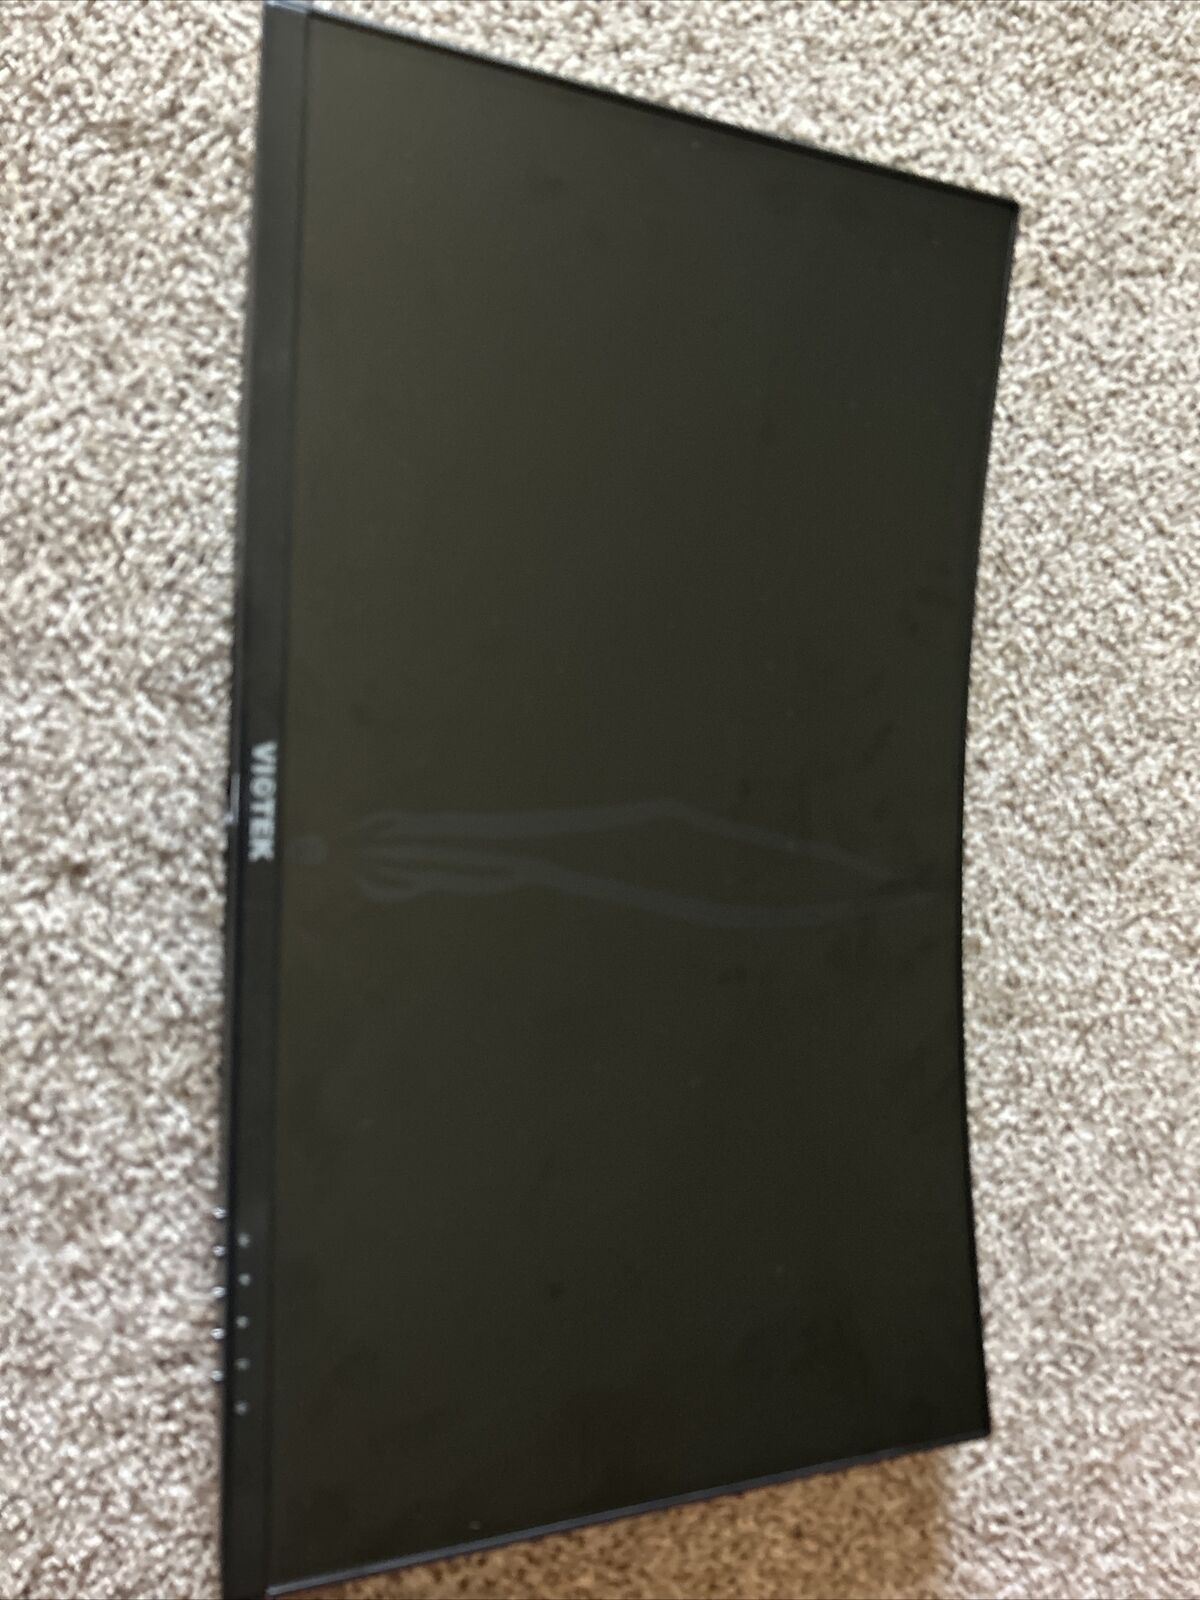 Viotek NBV27CB 27 inch Widescreen Curved Monitor - Black